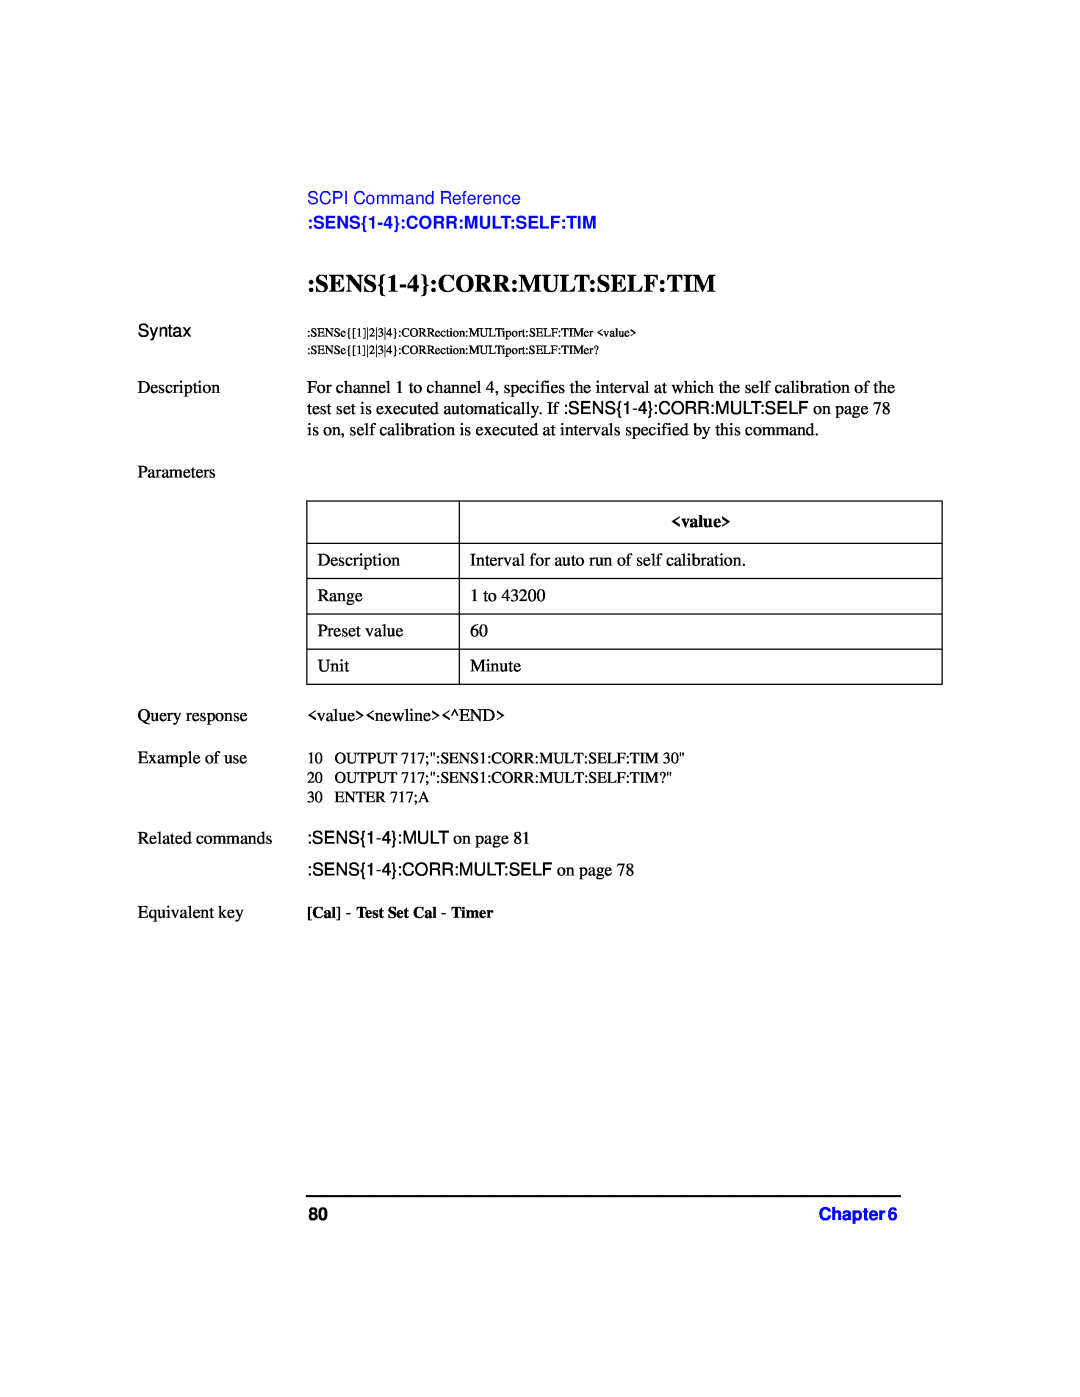 Agilent Technologies 87075C manual SENS1-4CORRMULTSELFTIM, SCPI Command Reference, value, Equivalent key 